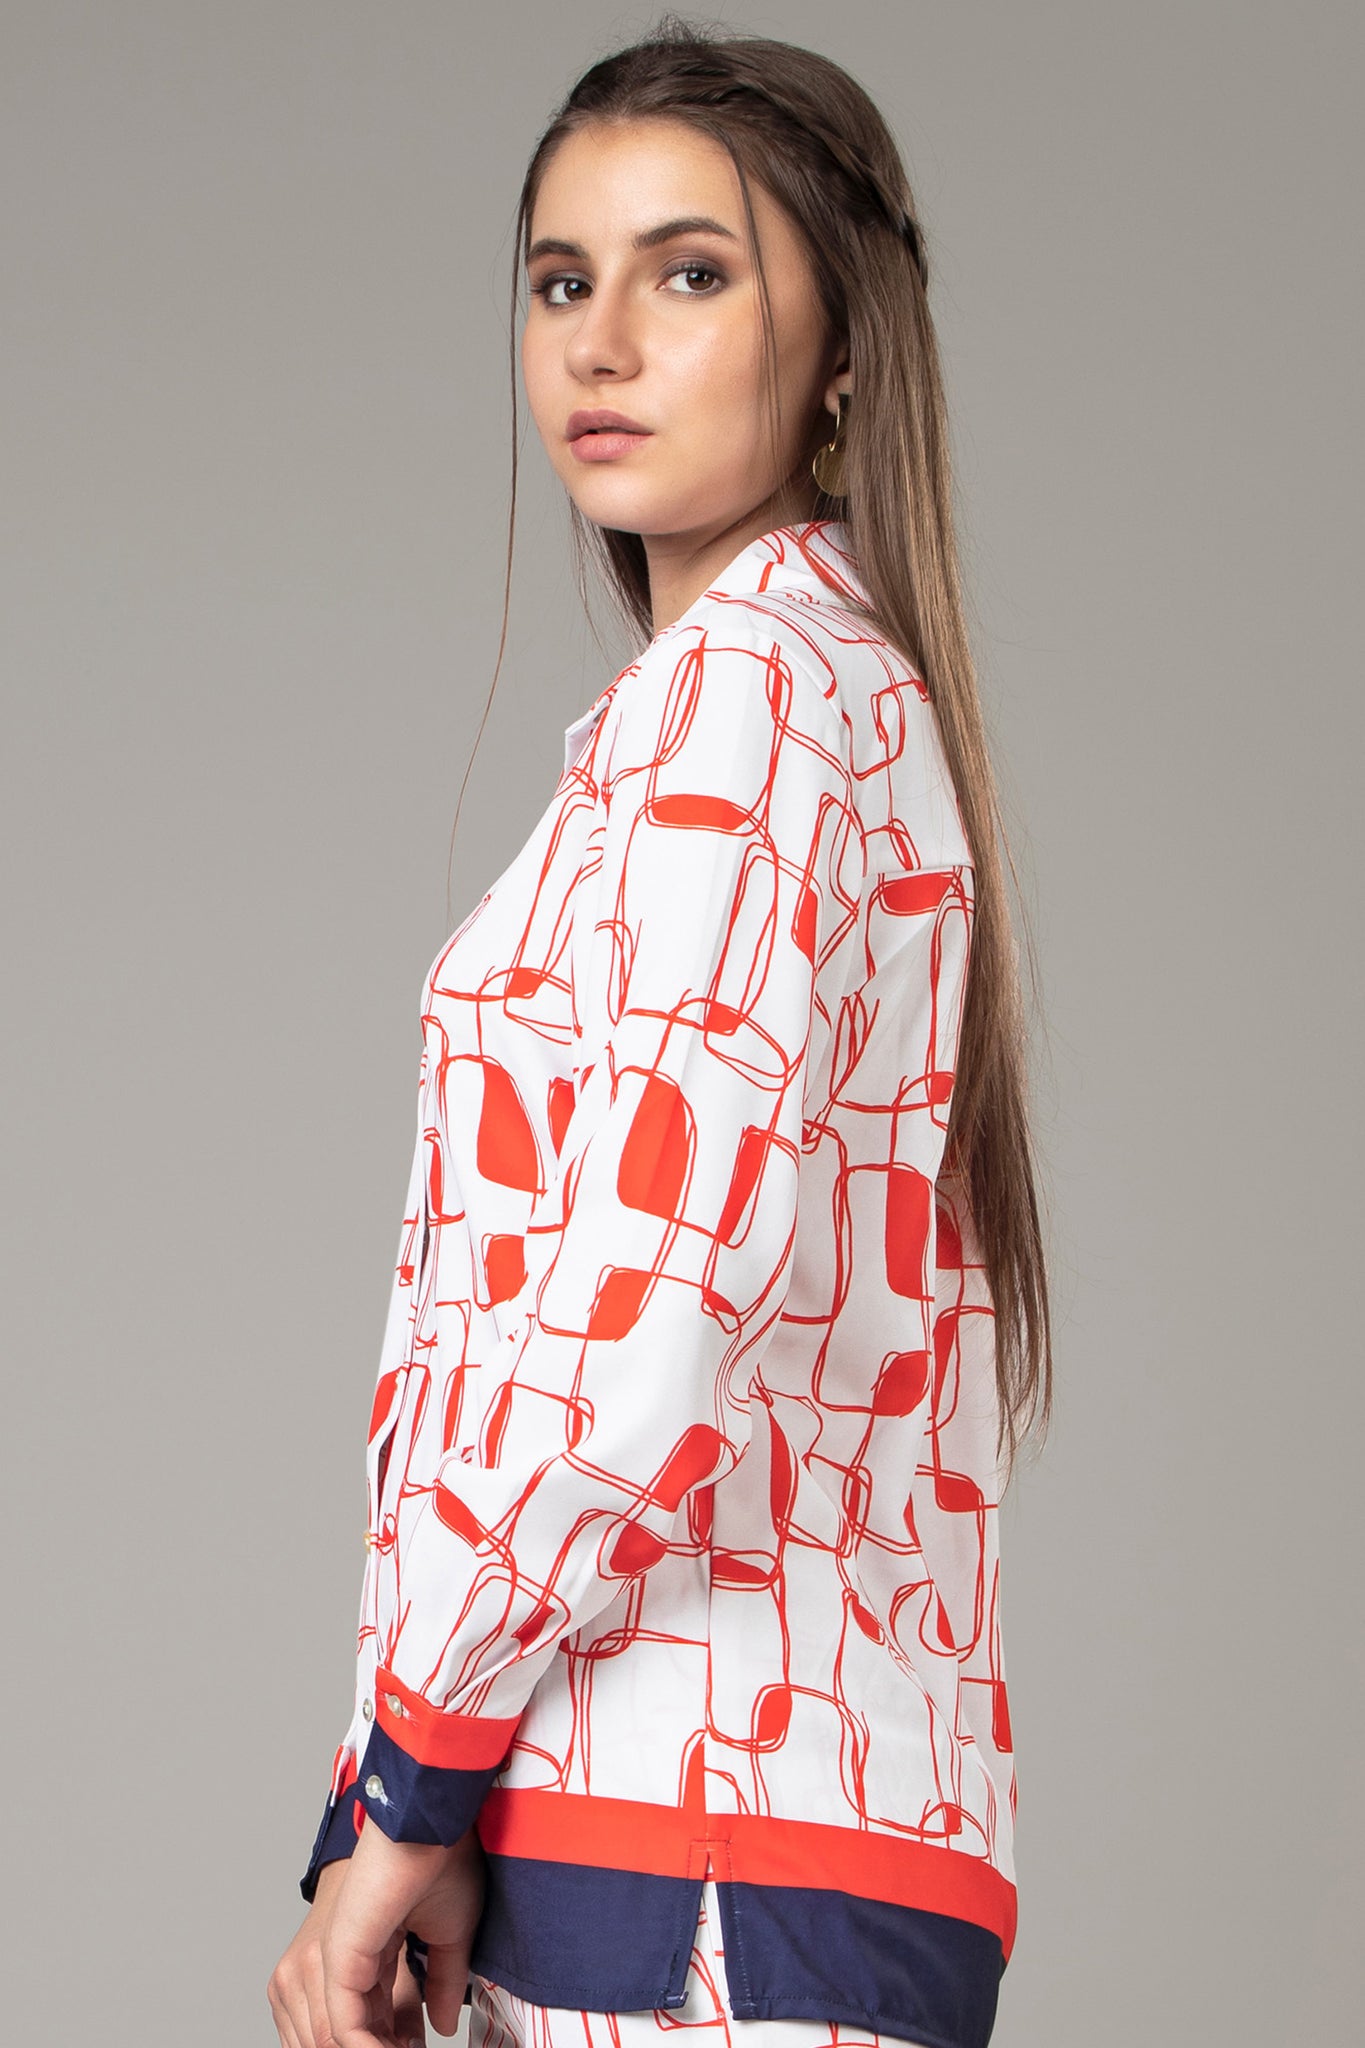 Stylish Geometric Shirt For Women